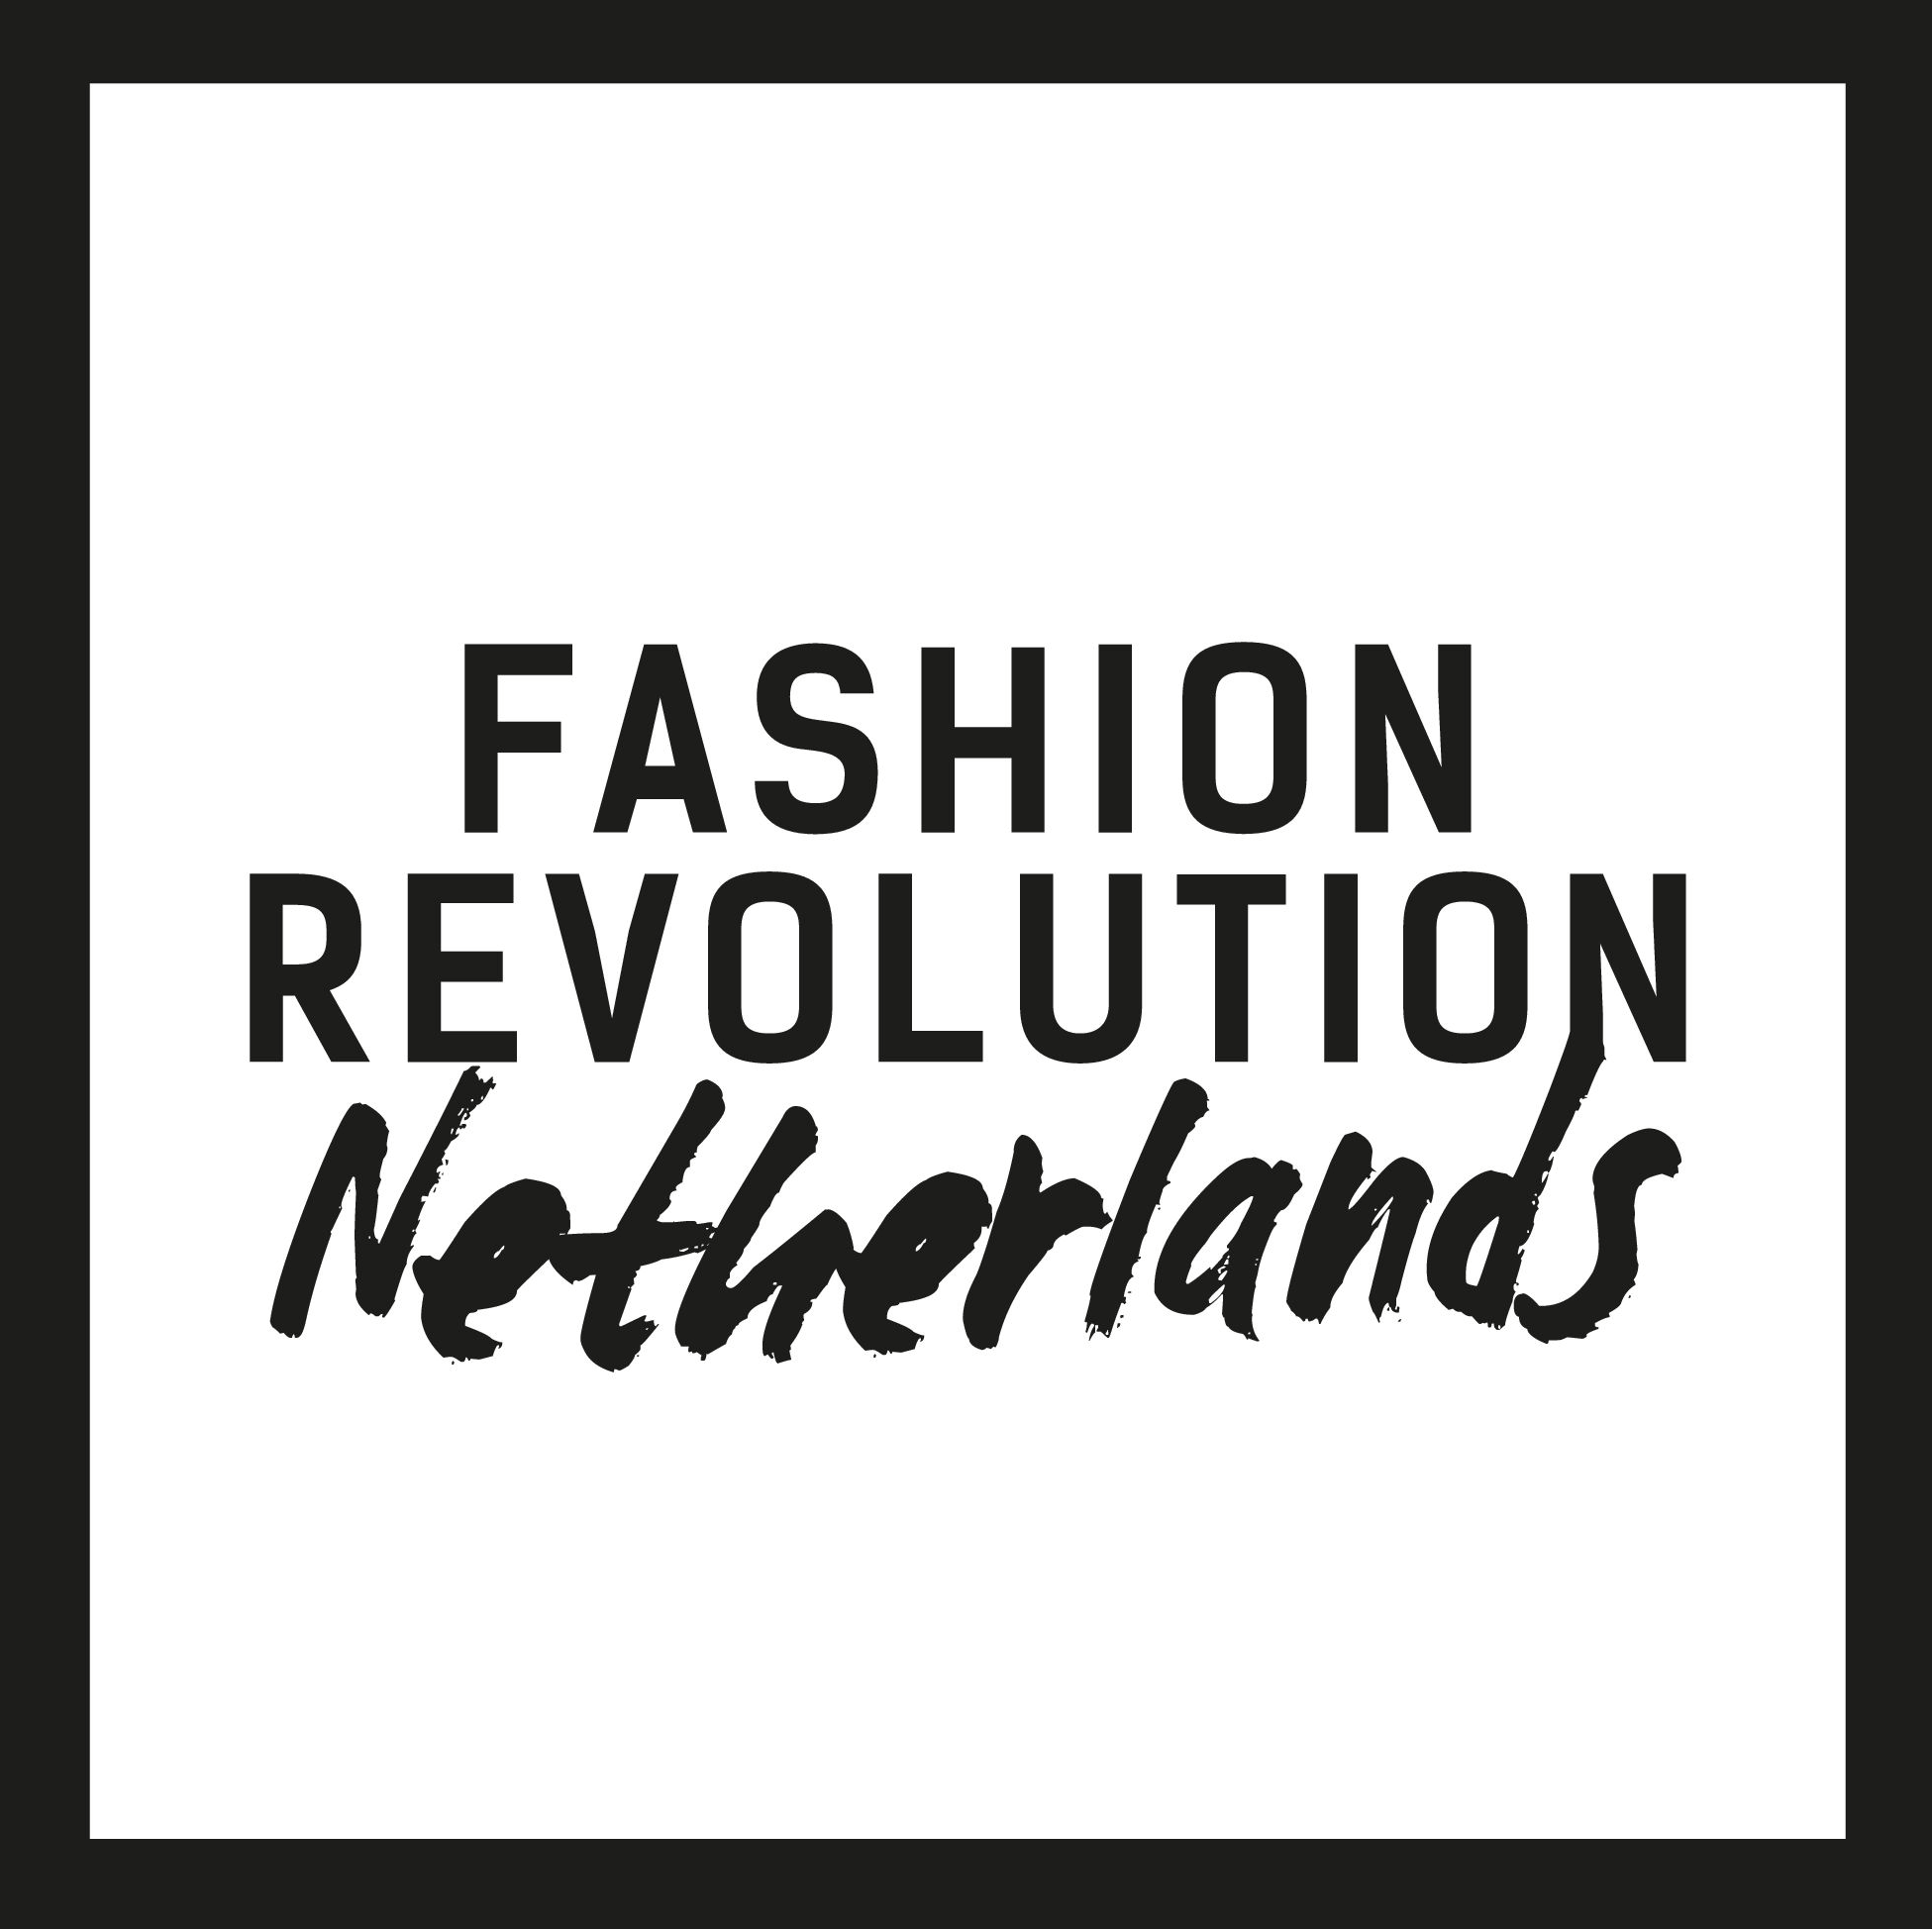 About - Fashion Revolution Netherlands